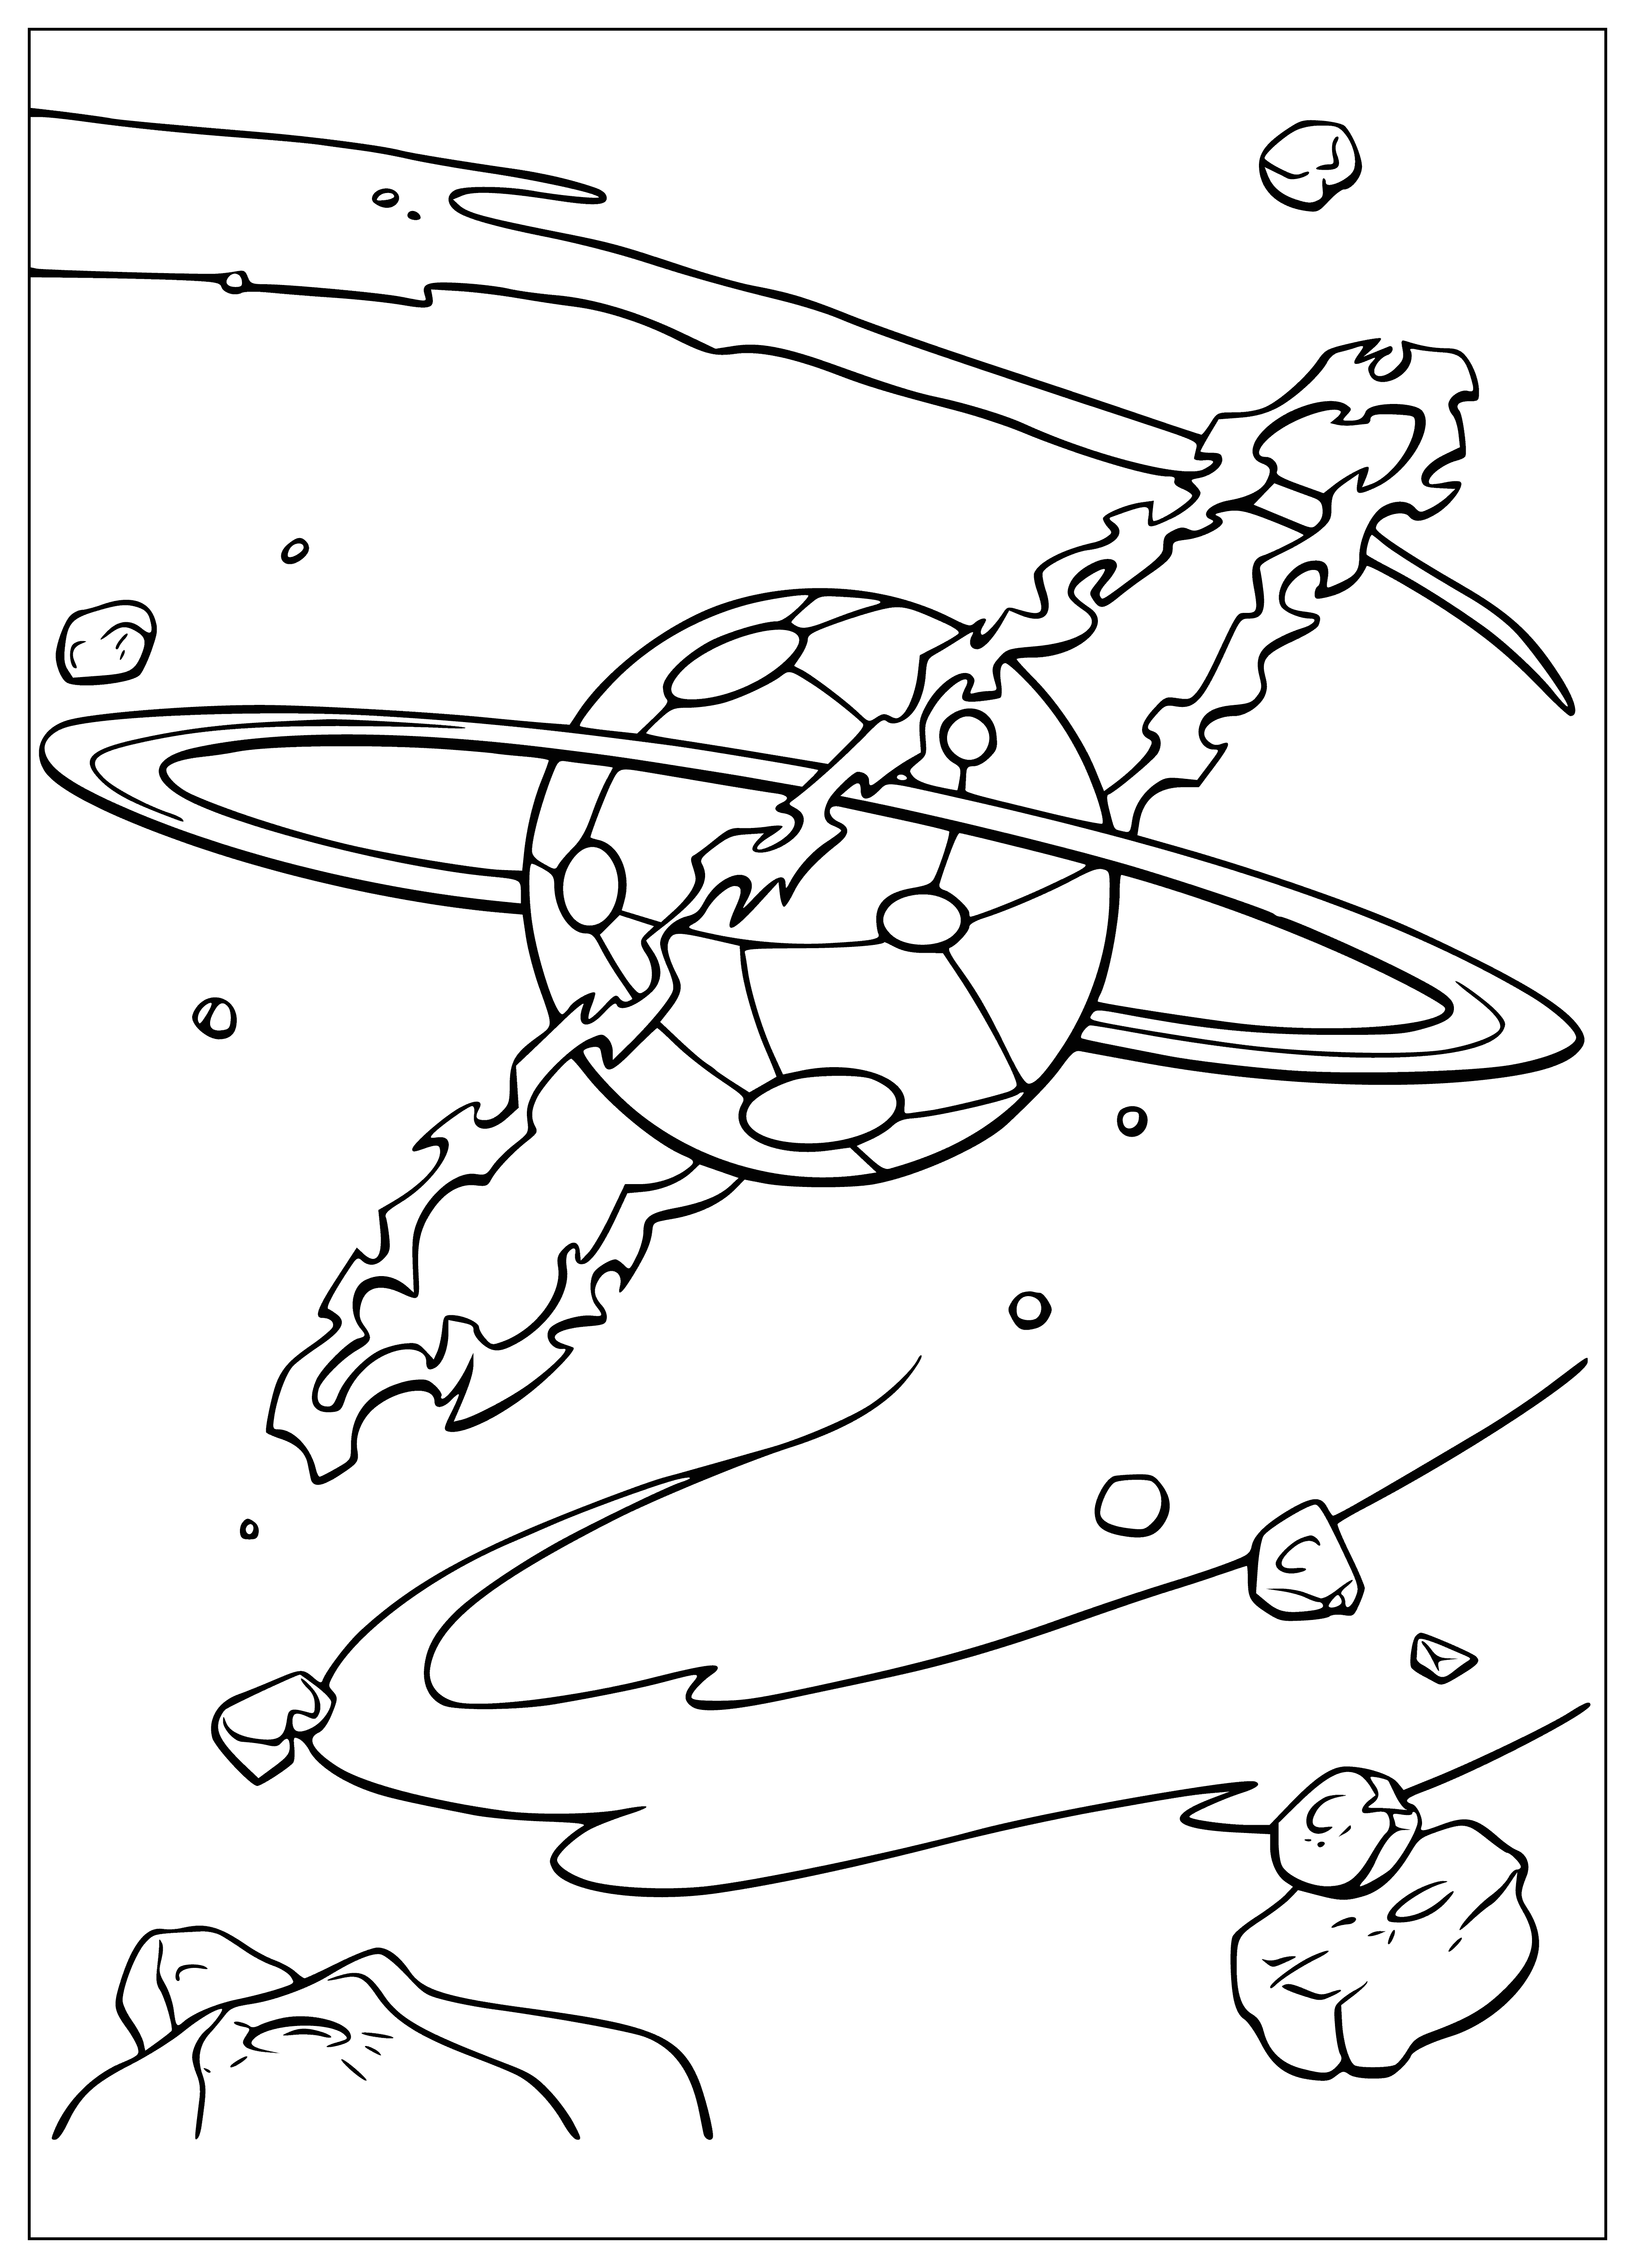 Treasure planet coloring page